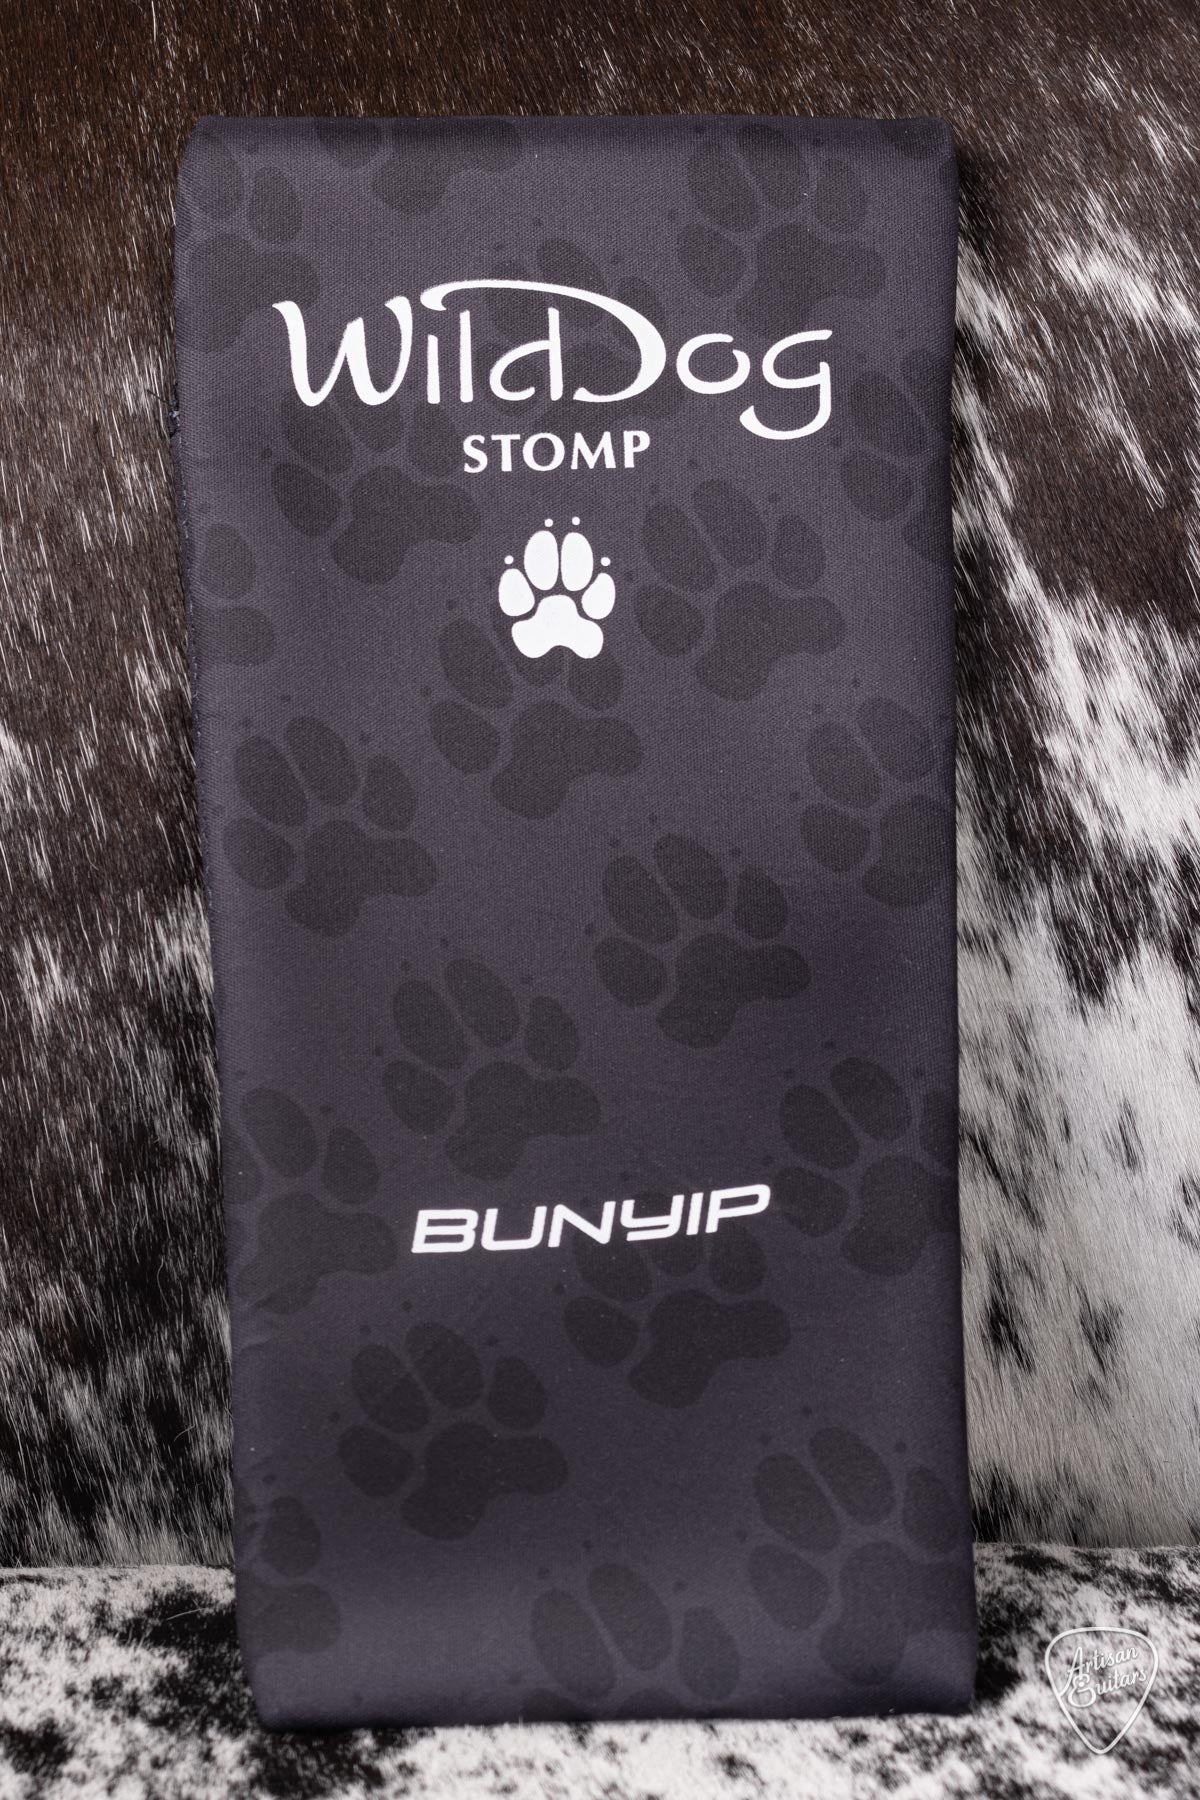 Wild Dog Bunyip Stomp Box - 16473